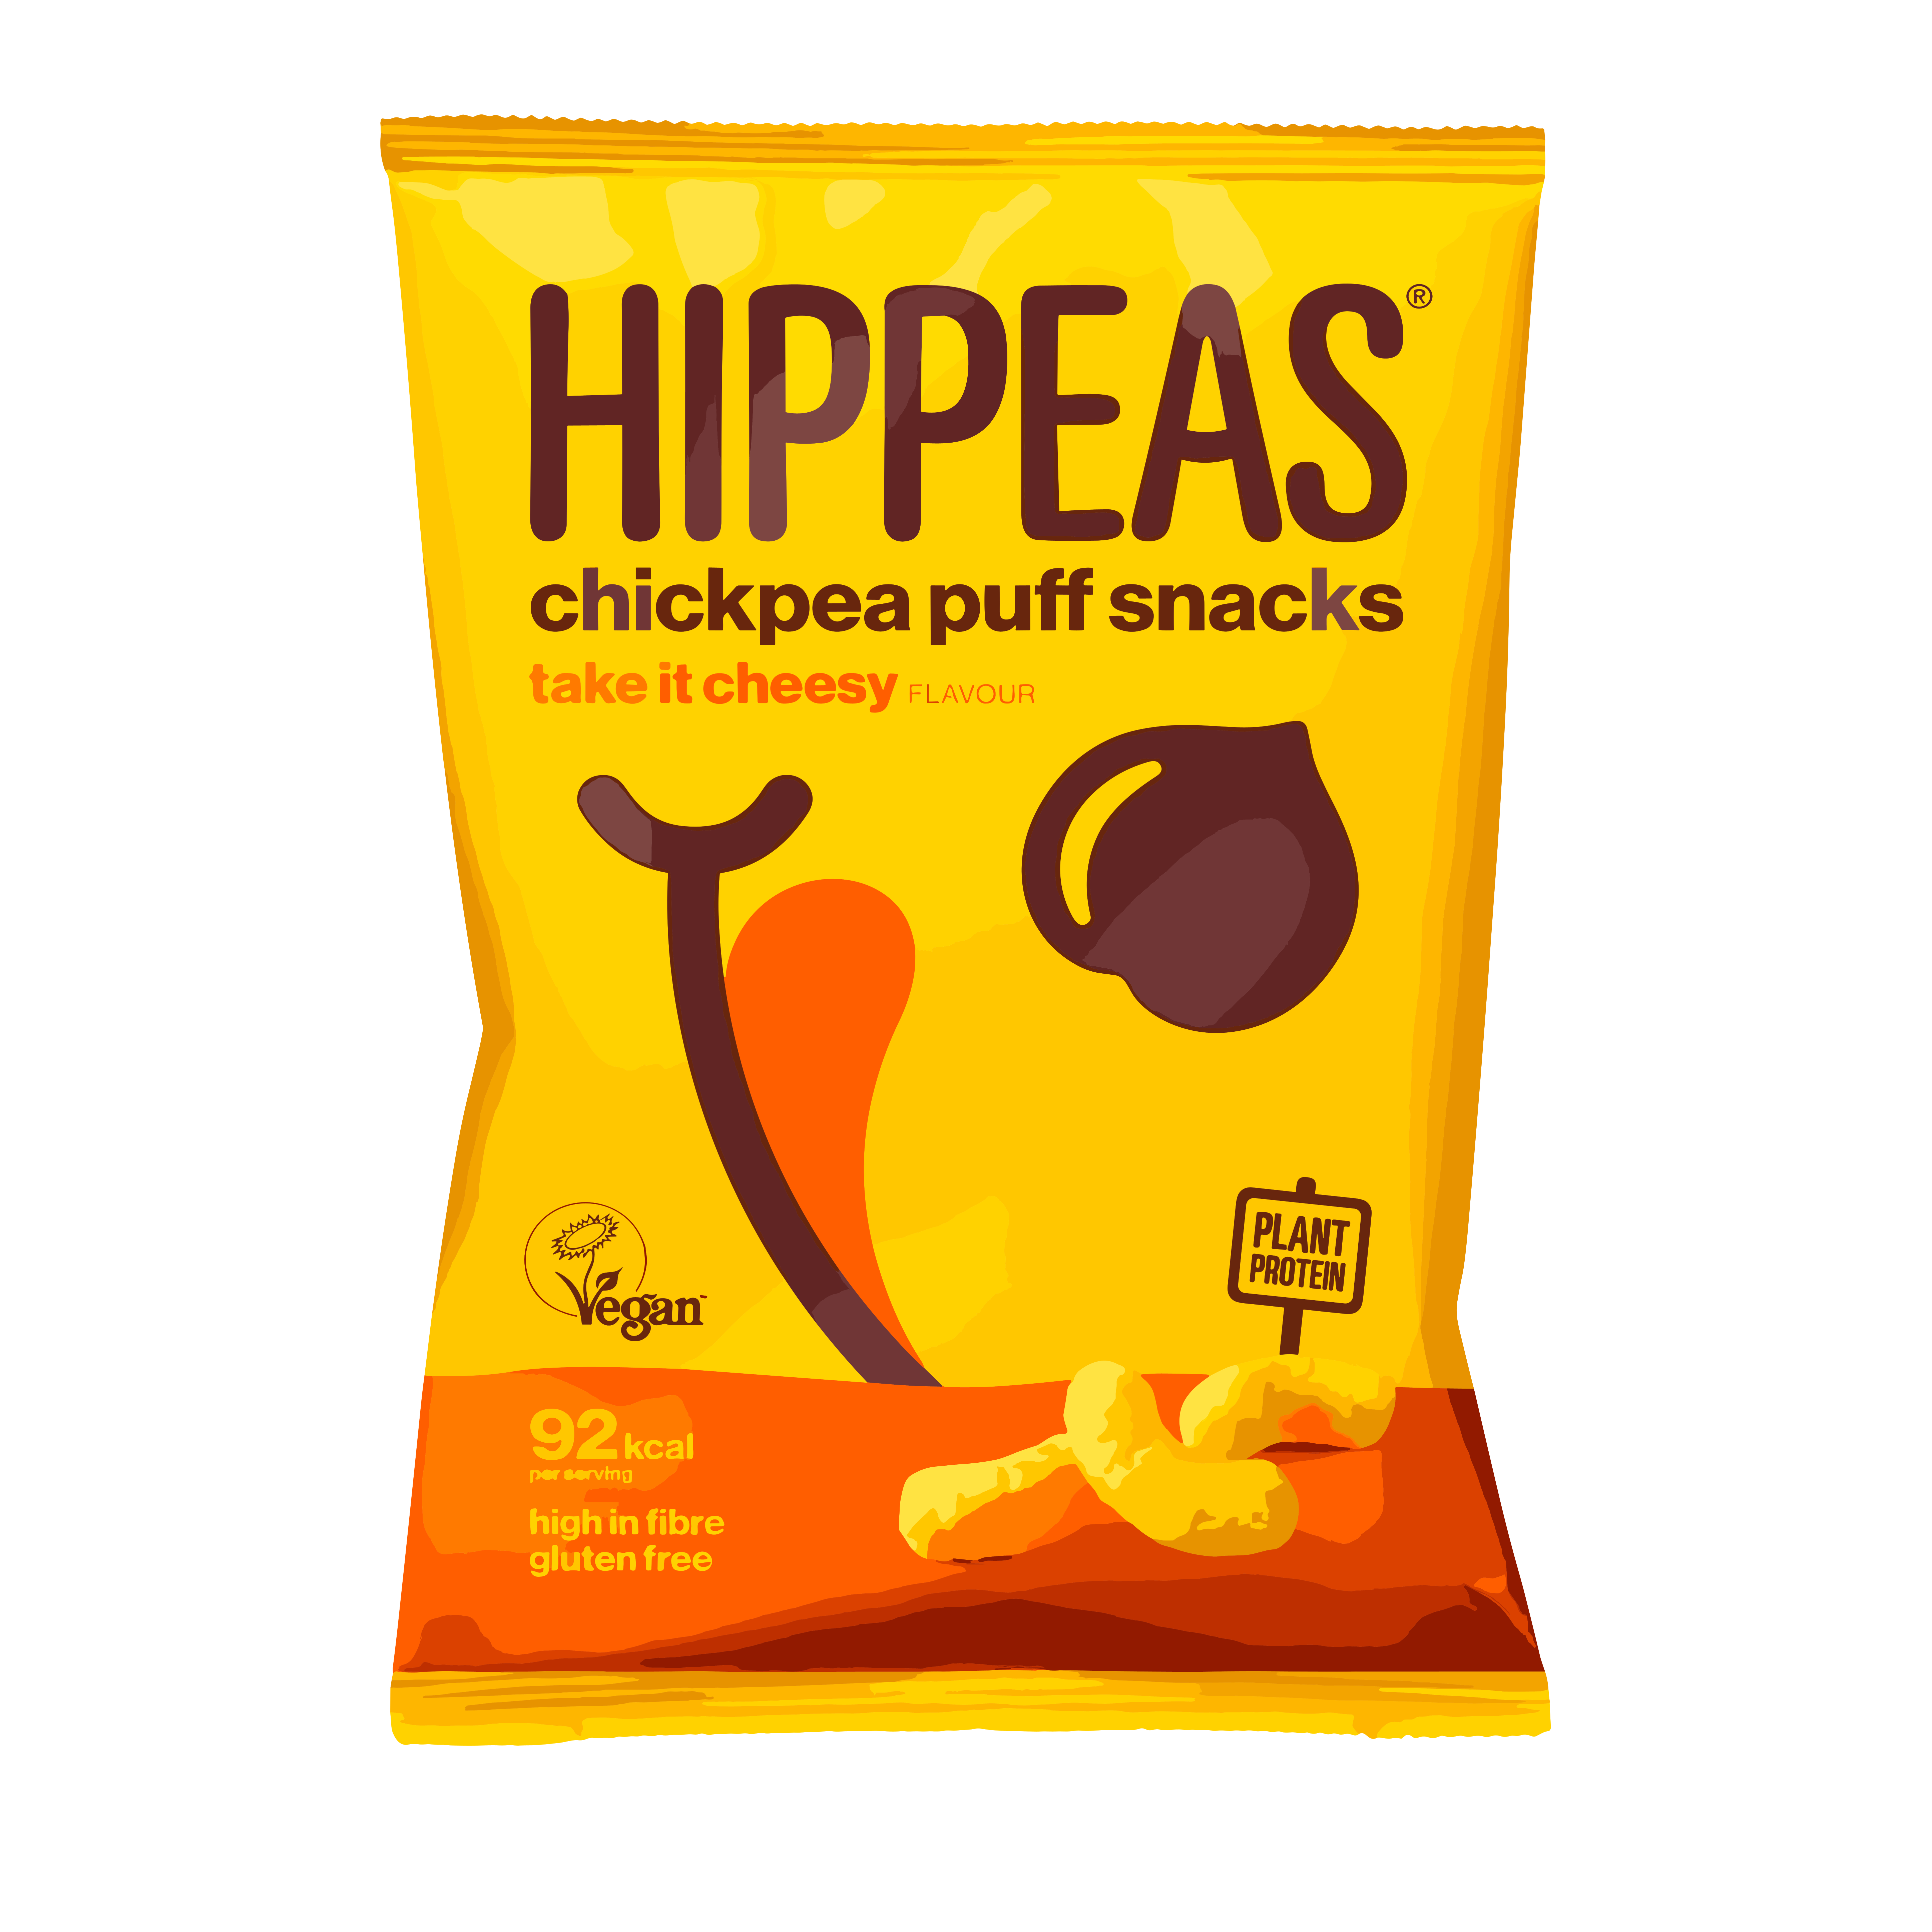 Hippeas Chick pea Puff Snack Take it Cheesy